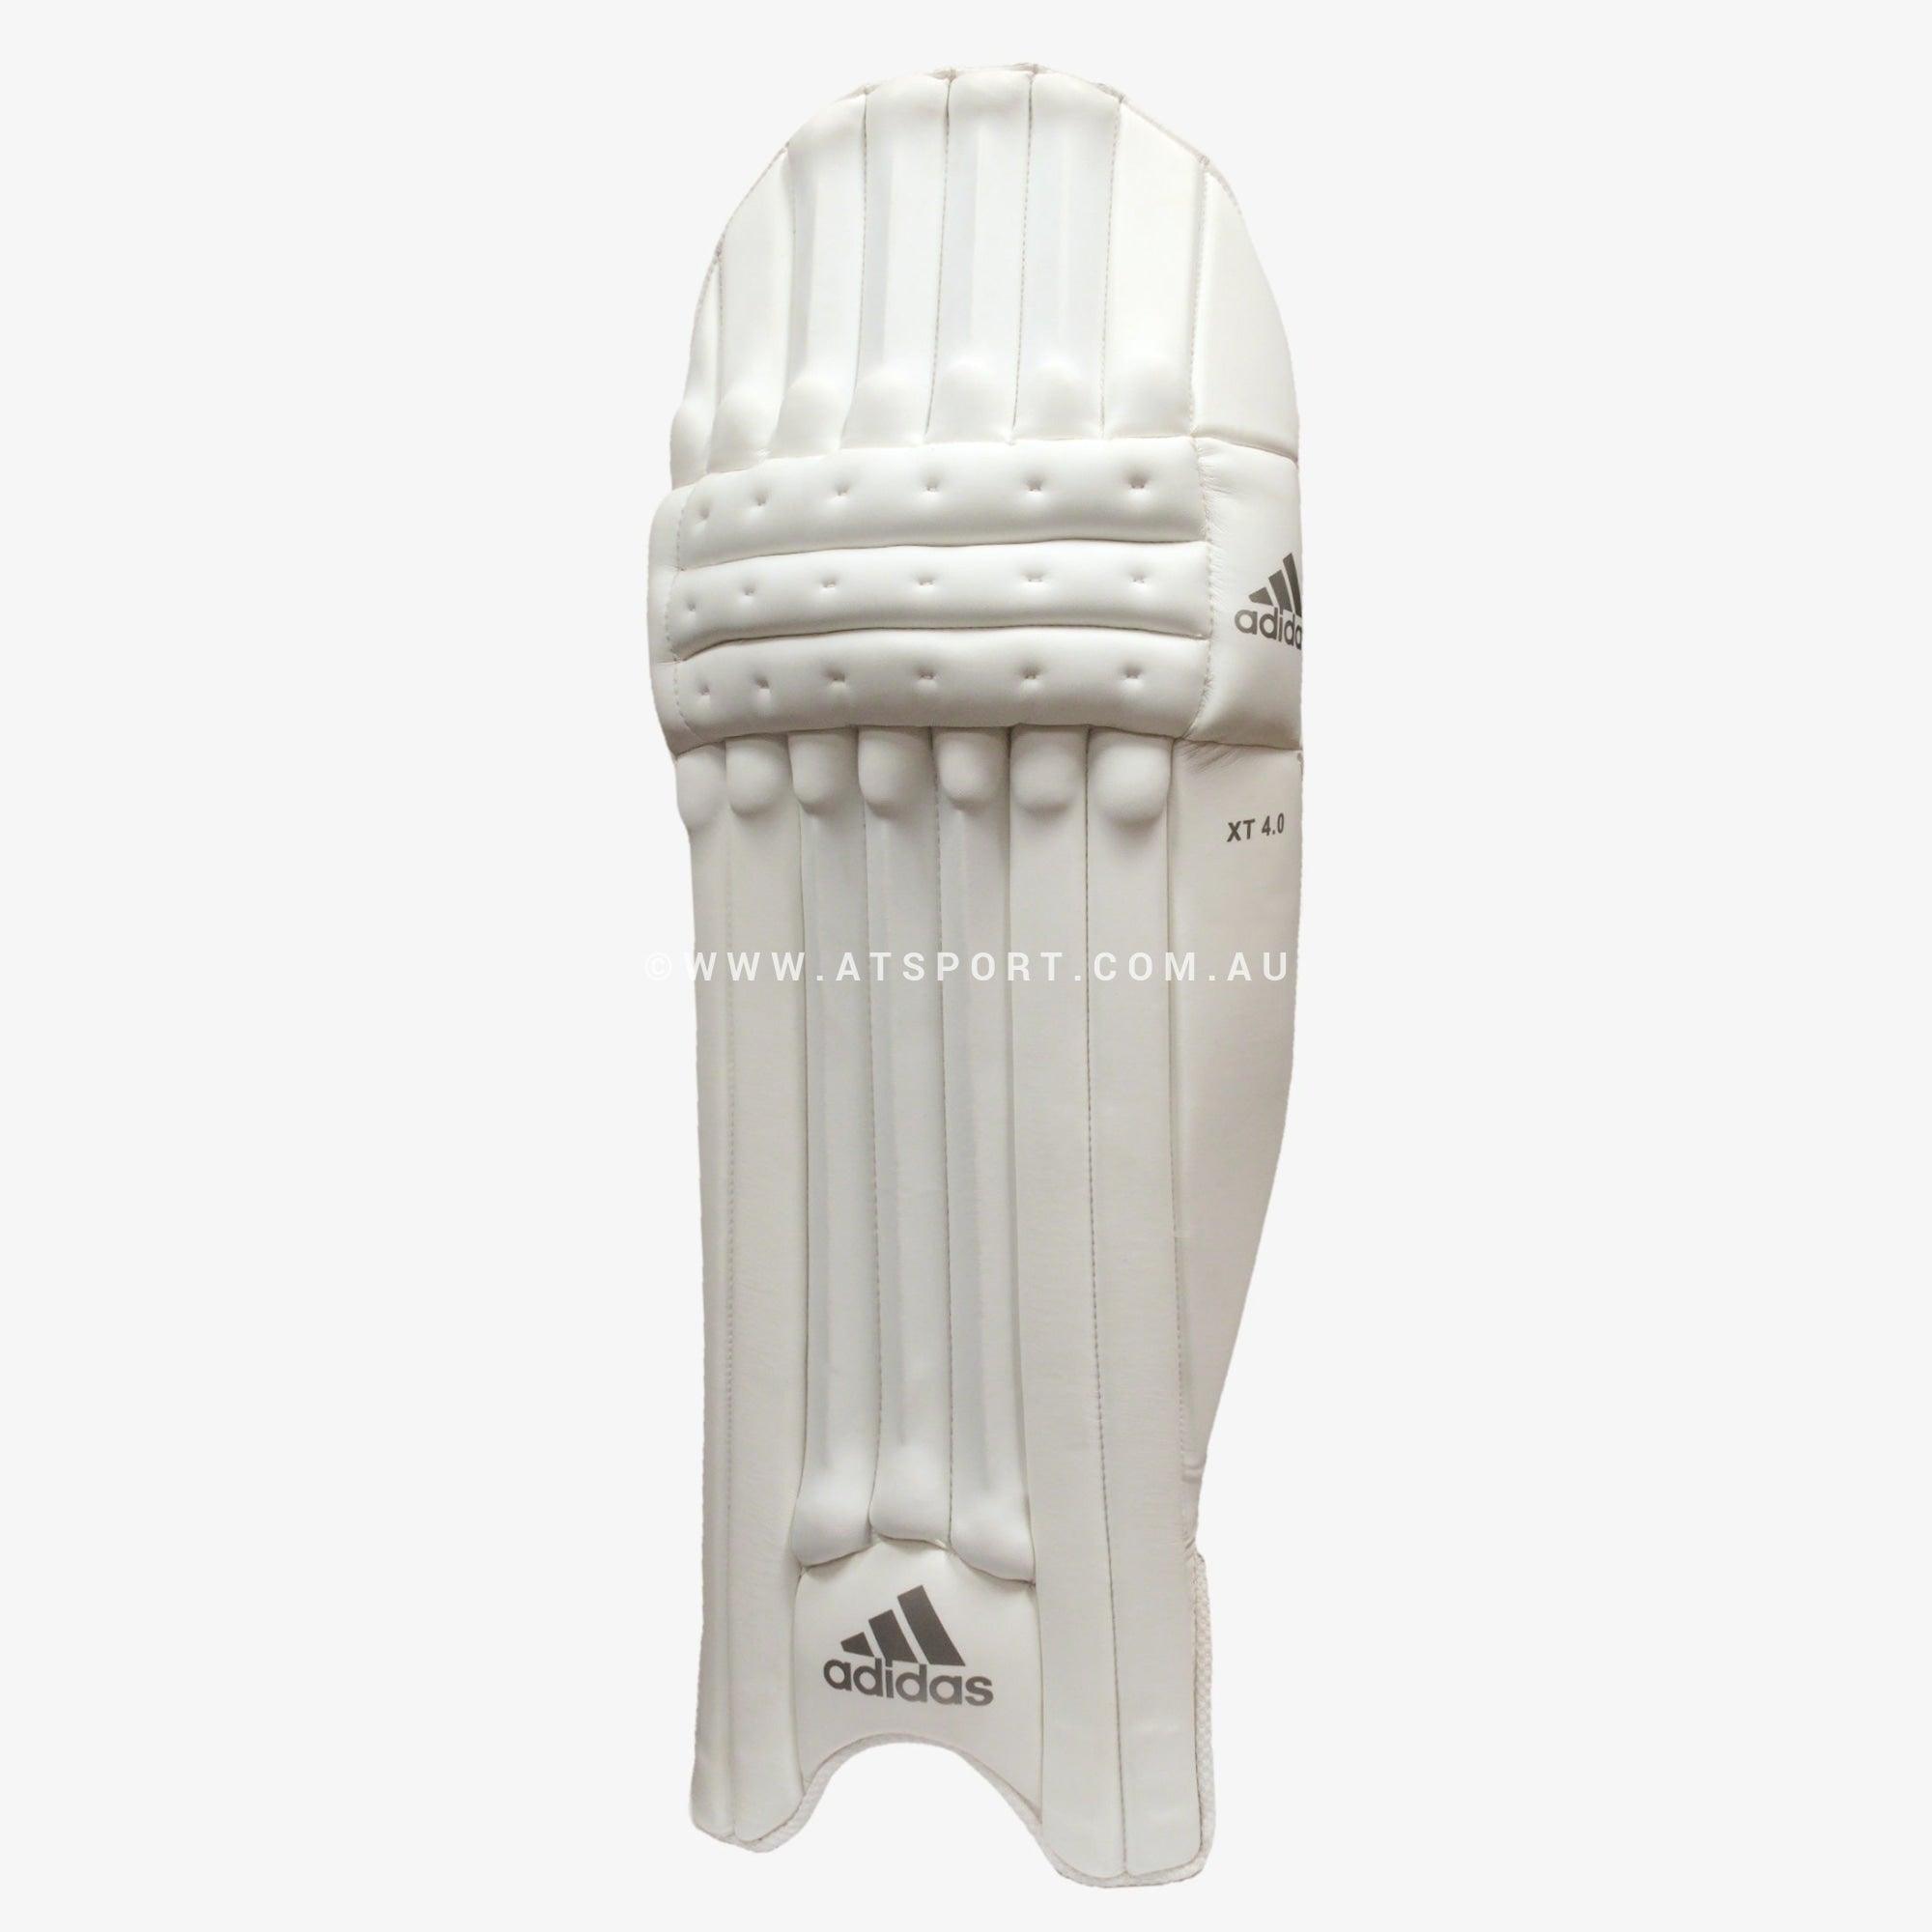 Adidas XT 4.0 Cricket Batting Pads - ADULT - AT Sports